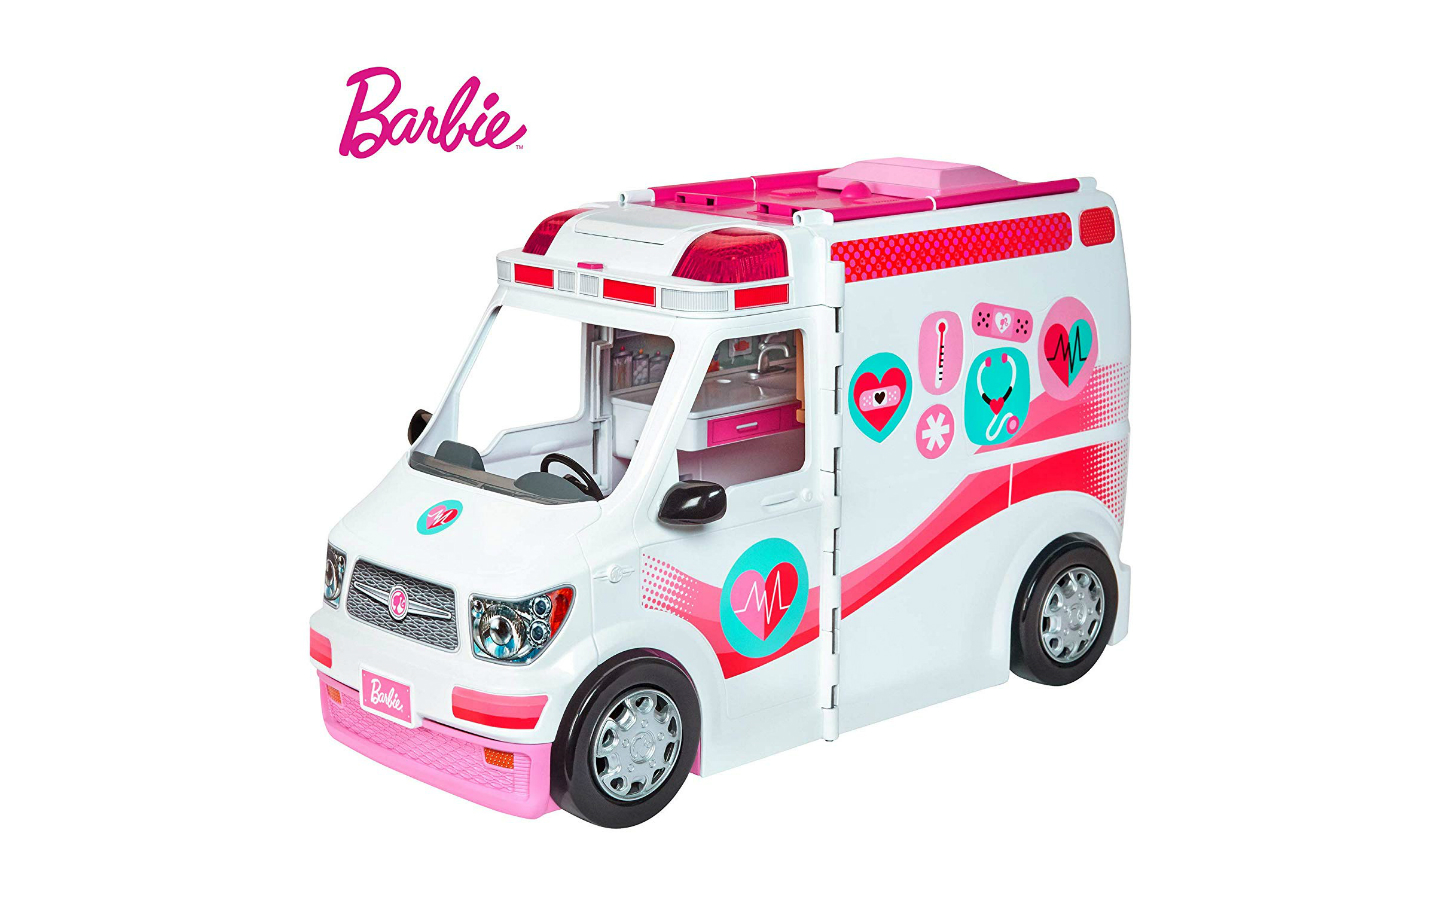 Christmas gift ideas for car fan: Barbie Ambulance